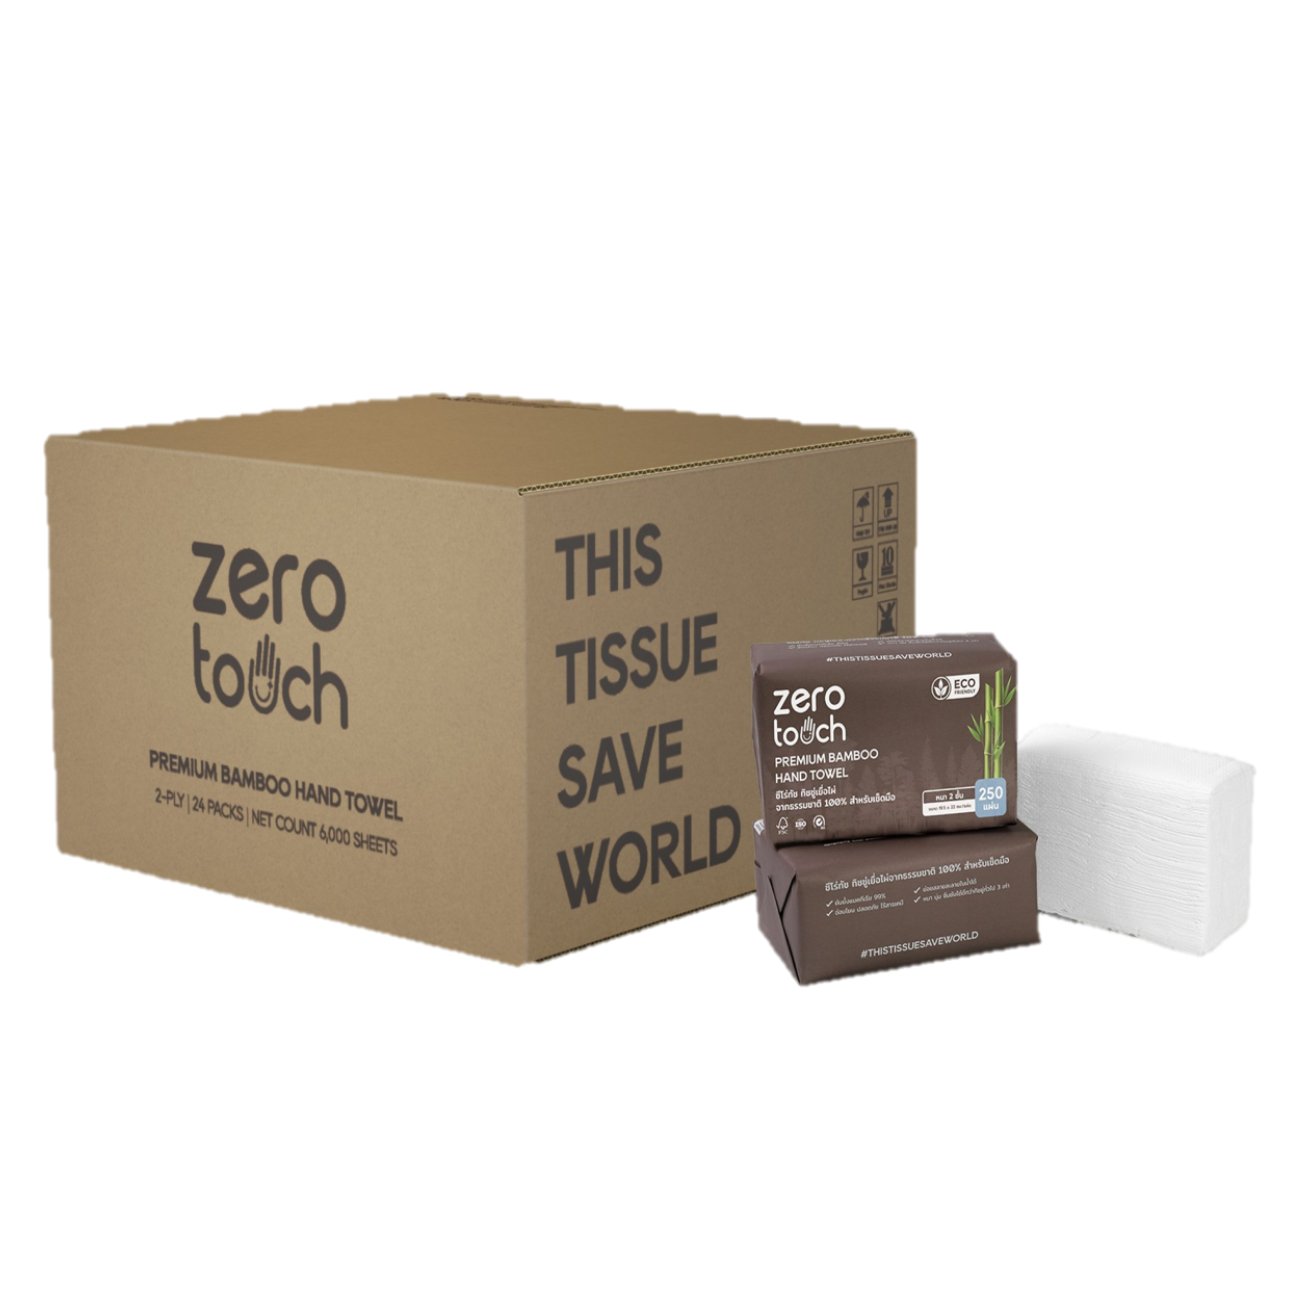 ZERO-TOUCH ทิชชู่เยื่อไผ่จากธรรมชาติ 100% สำหรับเช็ดมือ (ราคาต่อห่อ, 24 ห่อ/กล่อง)